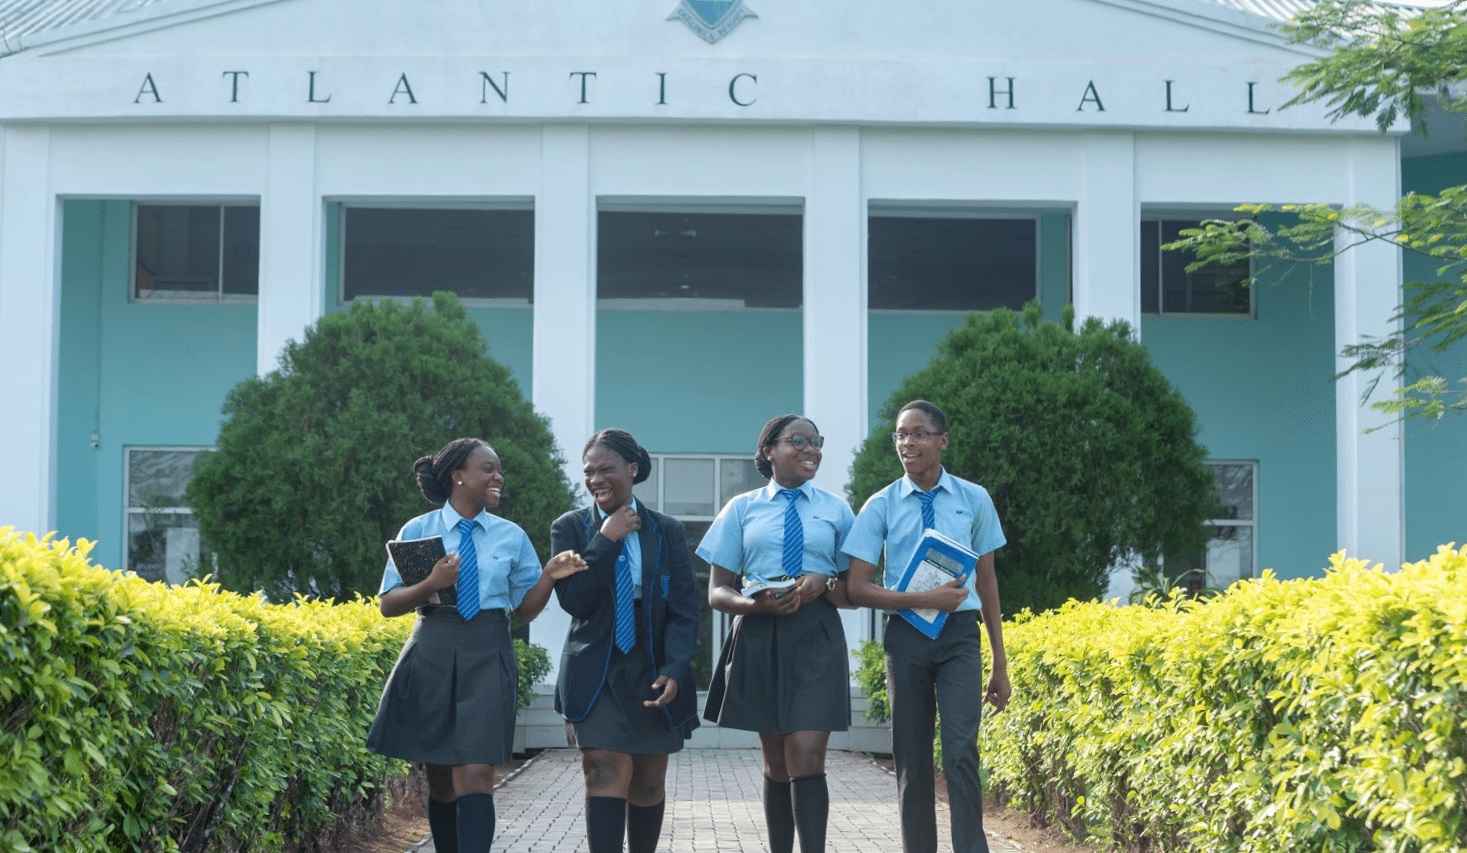 Atlantic Hall School